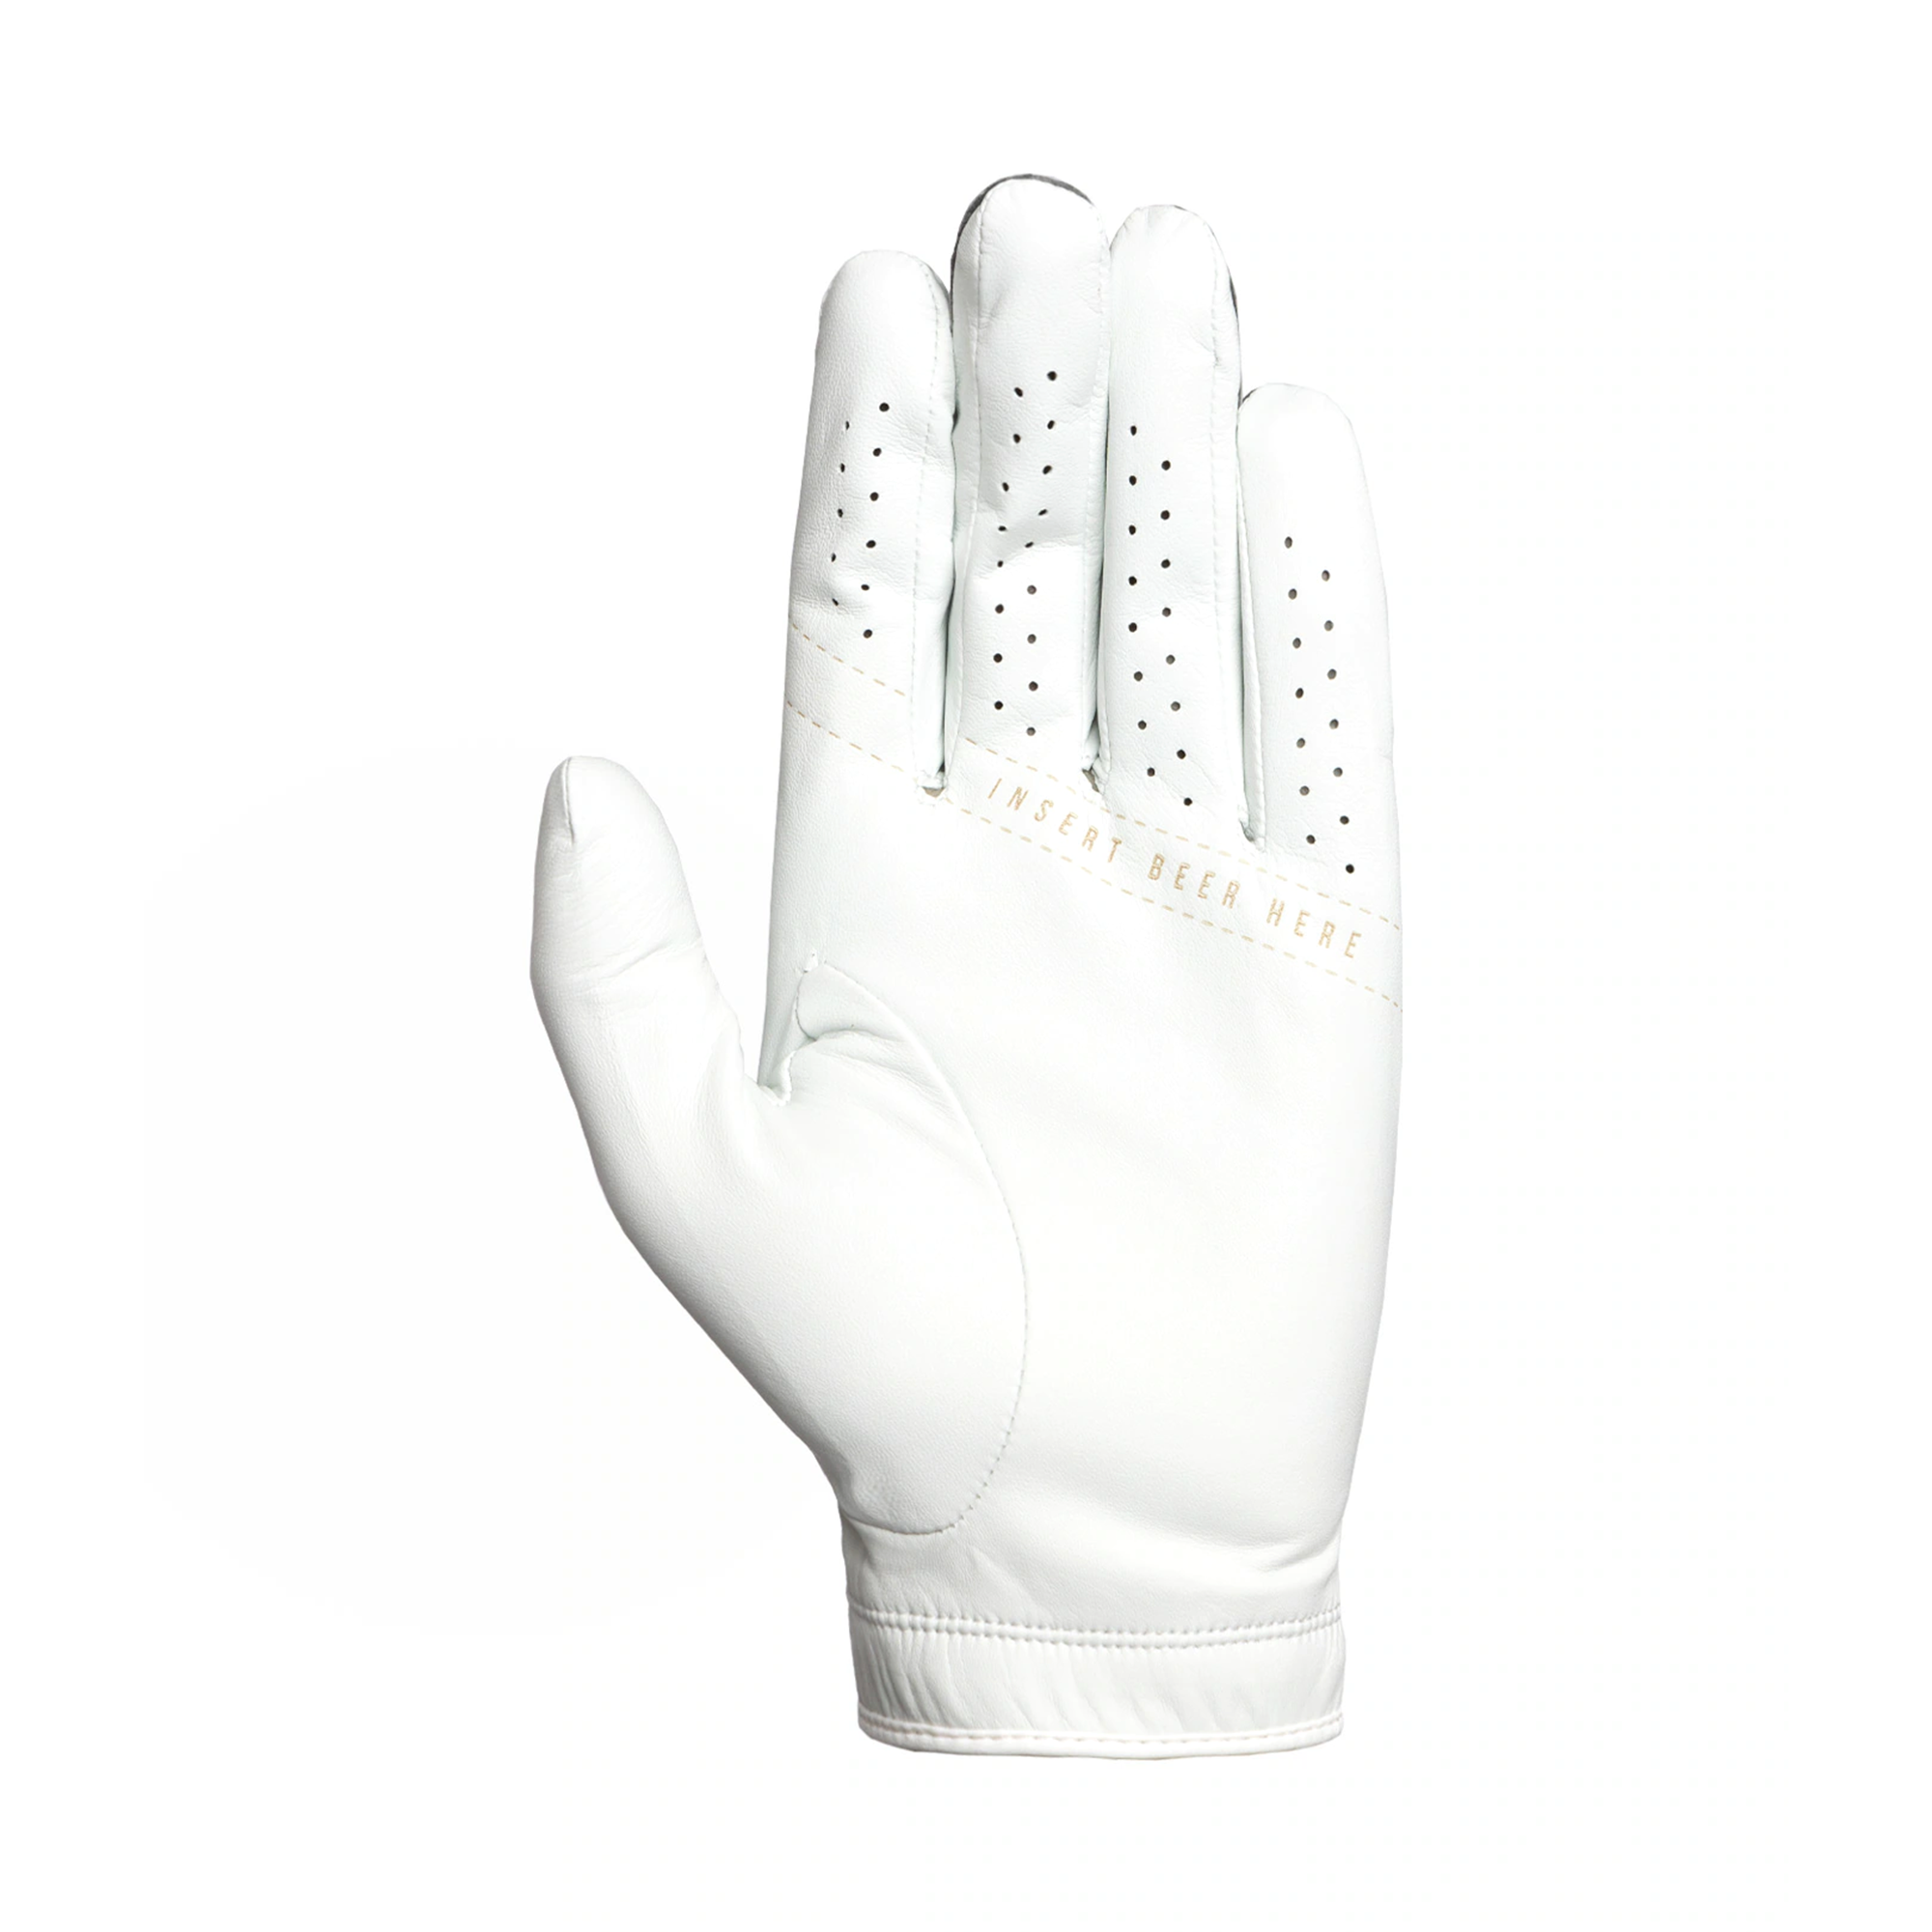 cuater-golf-big-block-glove-mlh-4mw145-white-function18